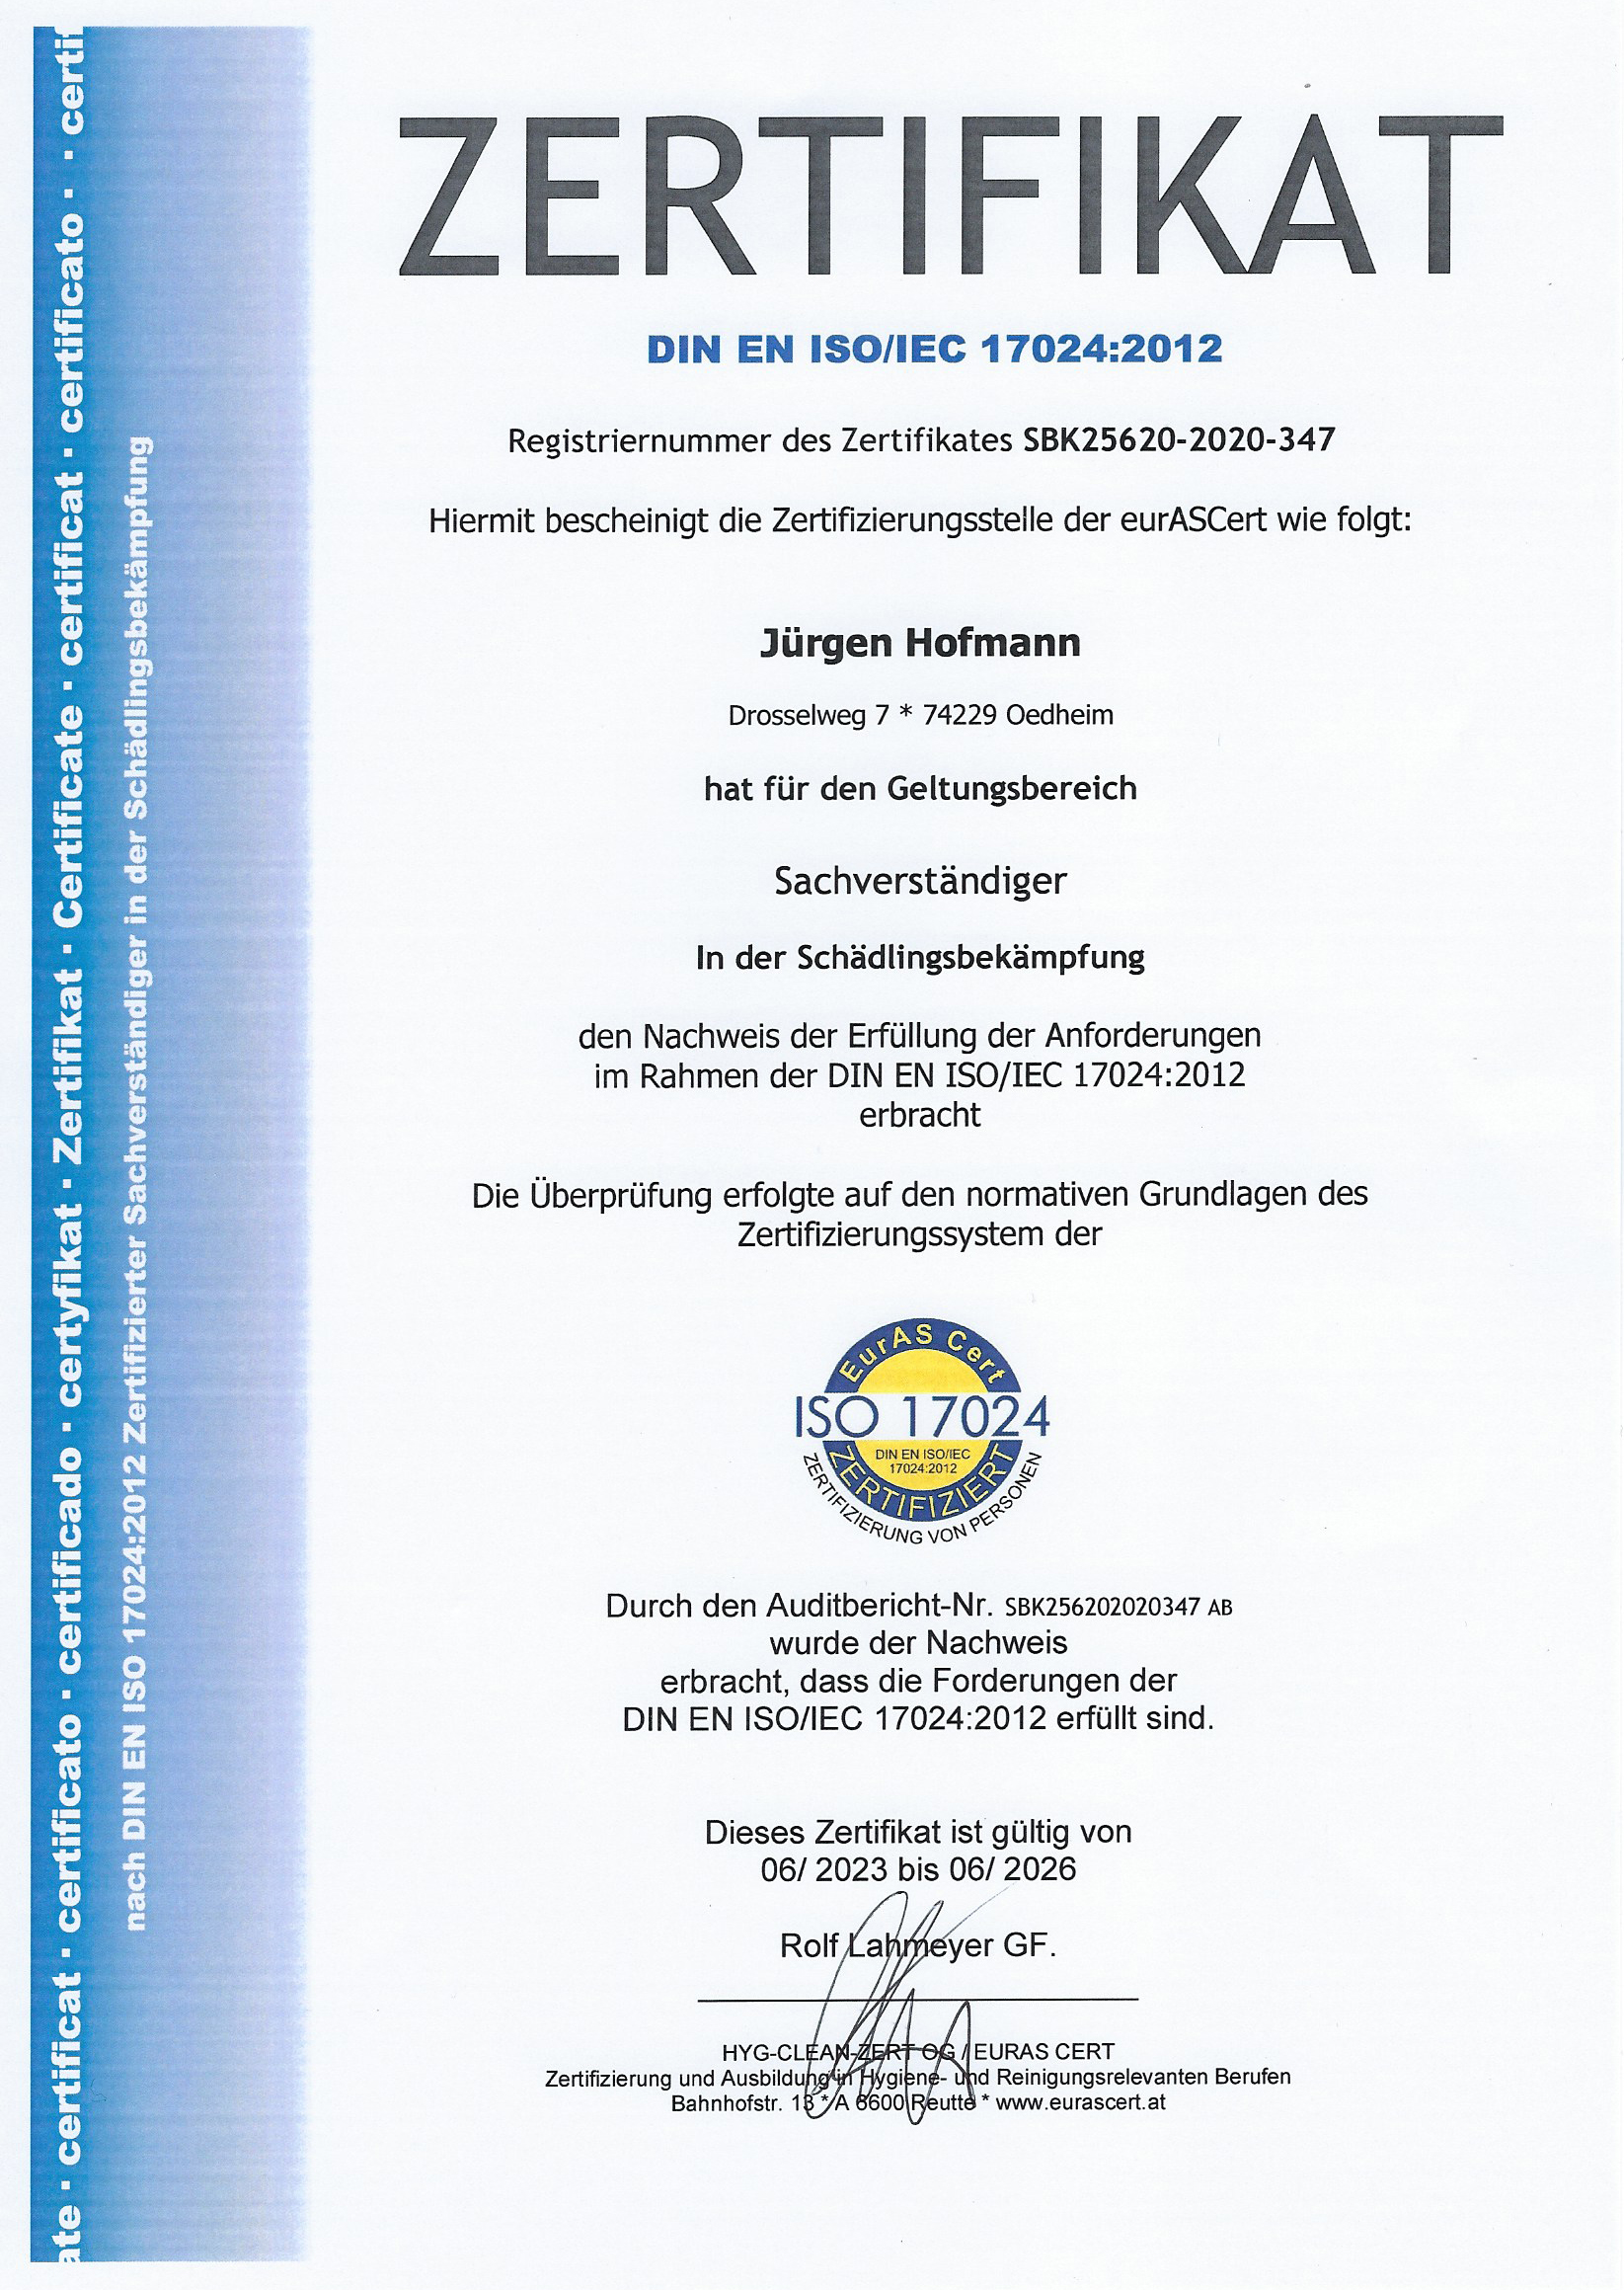 Zertifizierter Sachverständiger für Schädlingsbekämpfung gem. DIN EN ISO/IEC 17024 Schädlingsbekämpfung Hofmann Oedheim